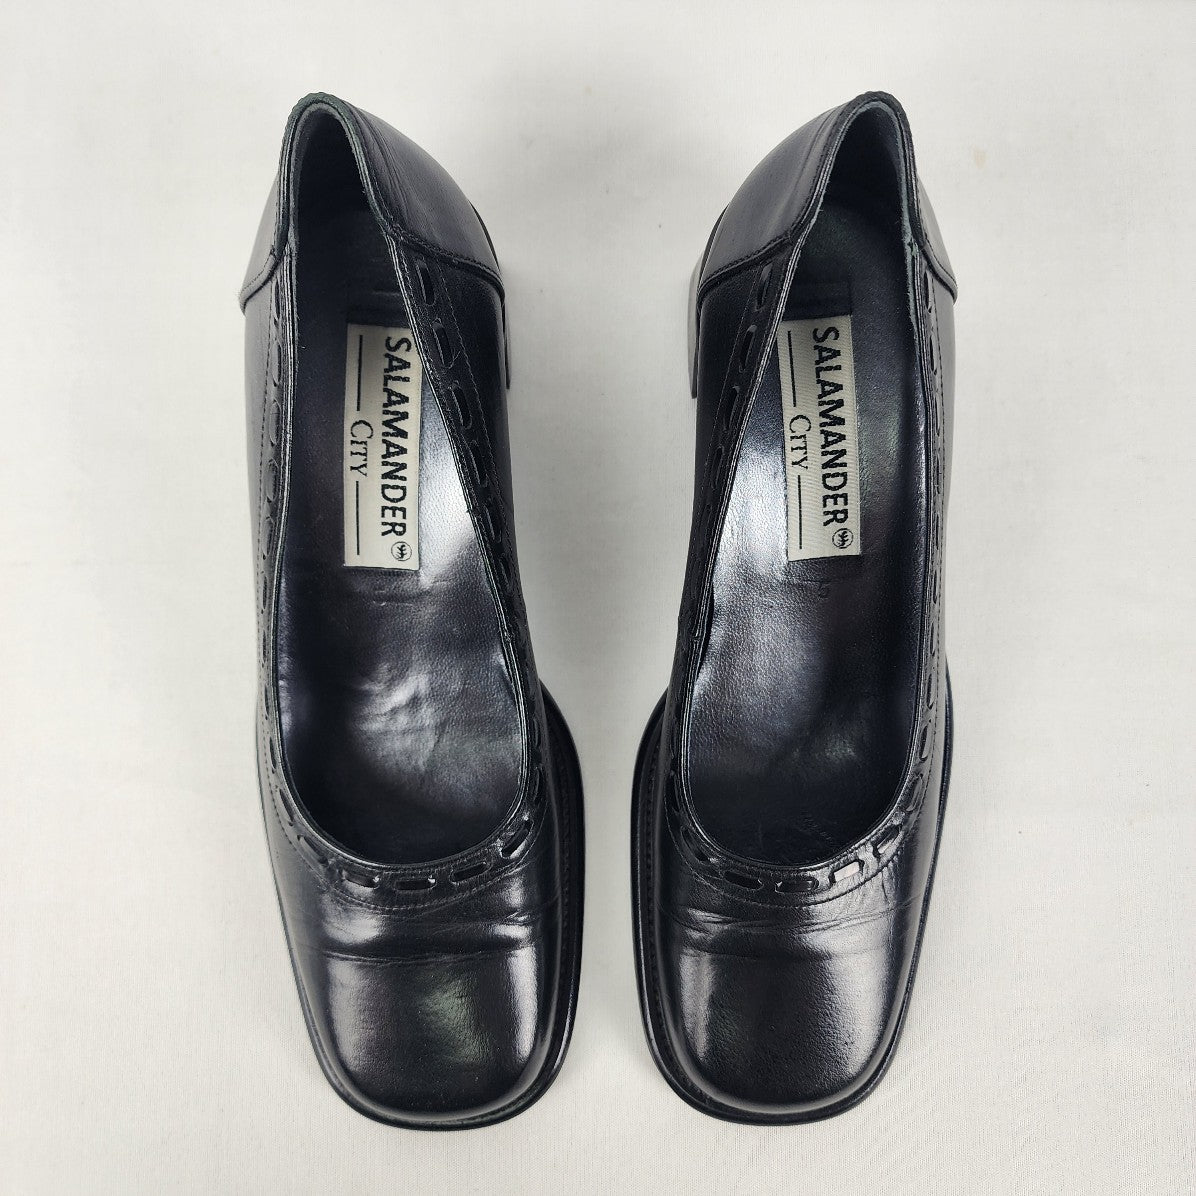 Salamander City Black Leather Block Heel Shoes Size 8